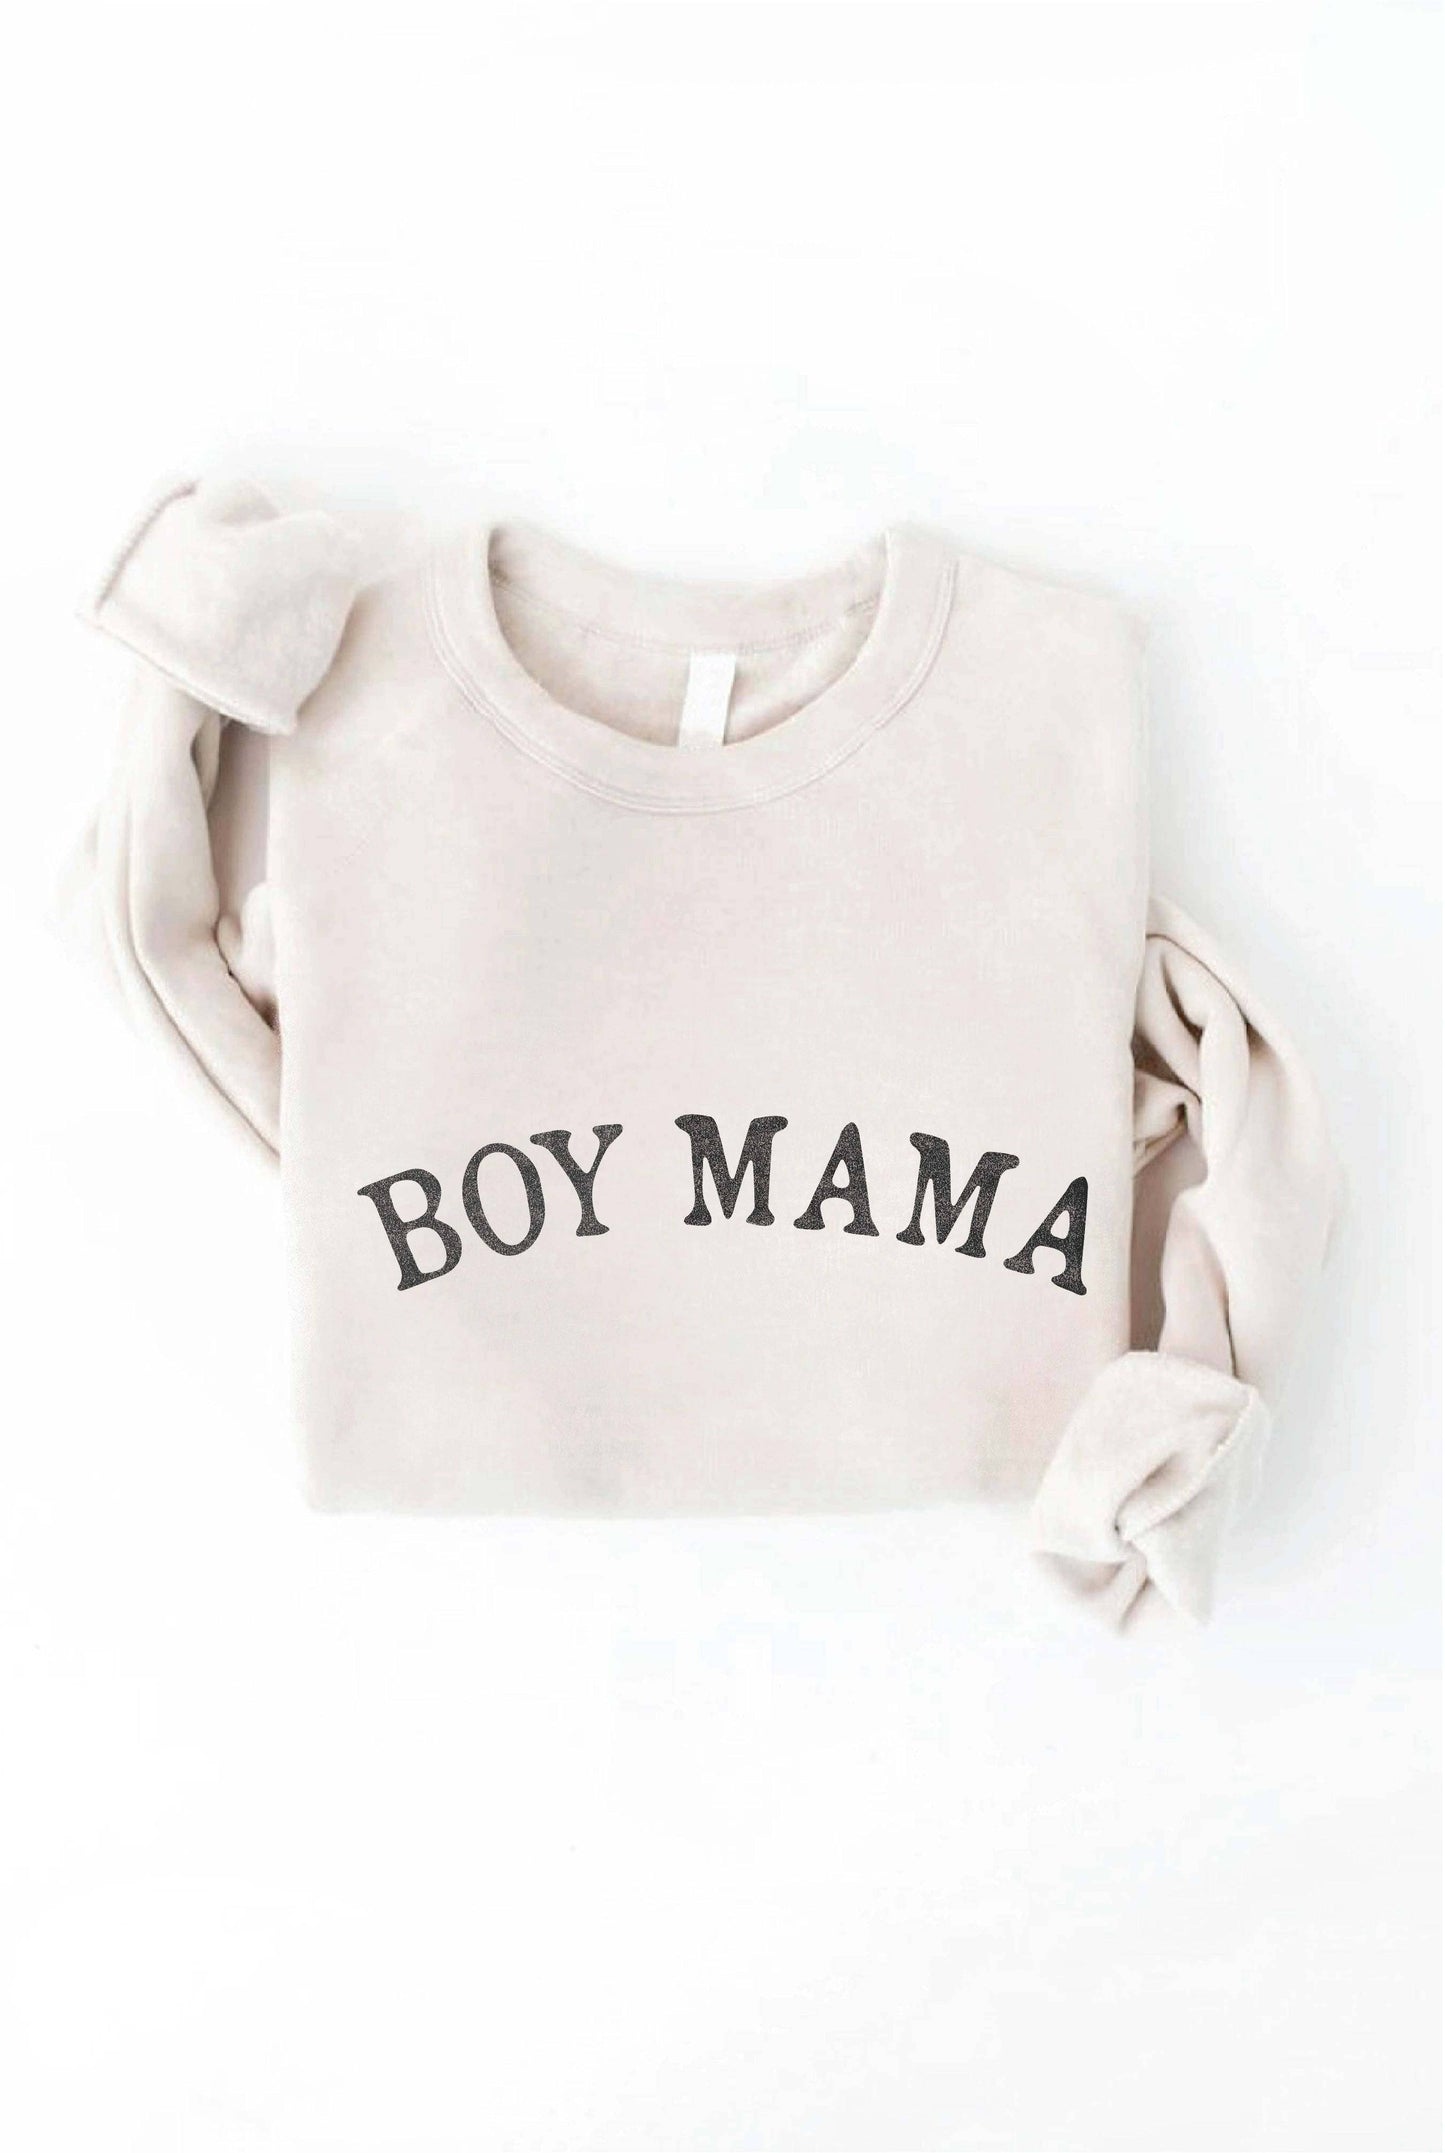 BOY MAMA Graphic Sweatshirt: S / HEATHER DUST